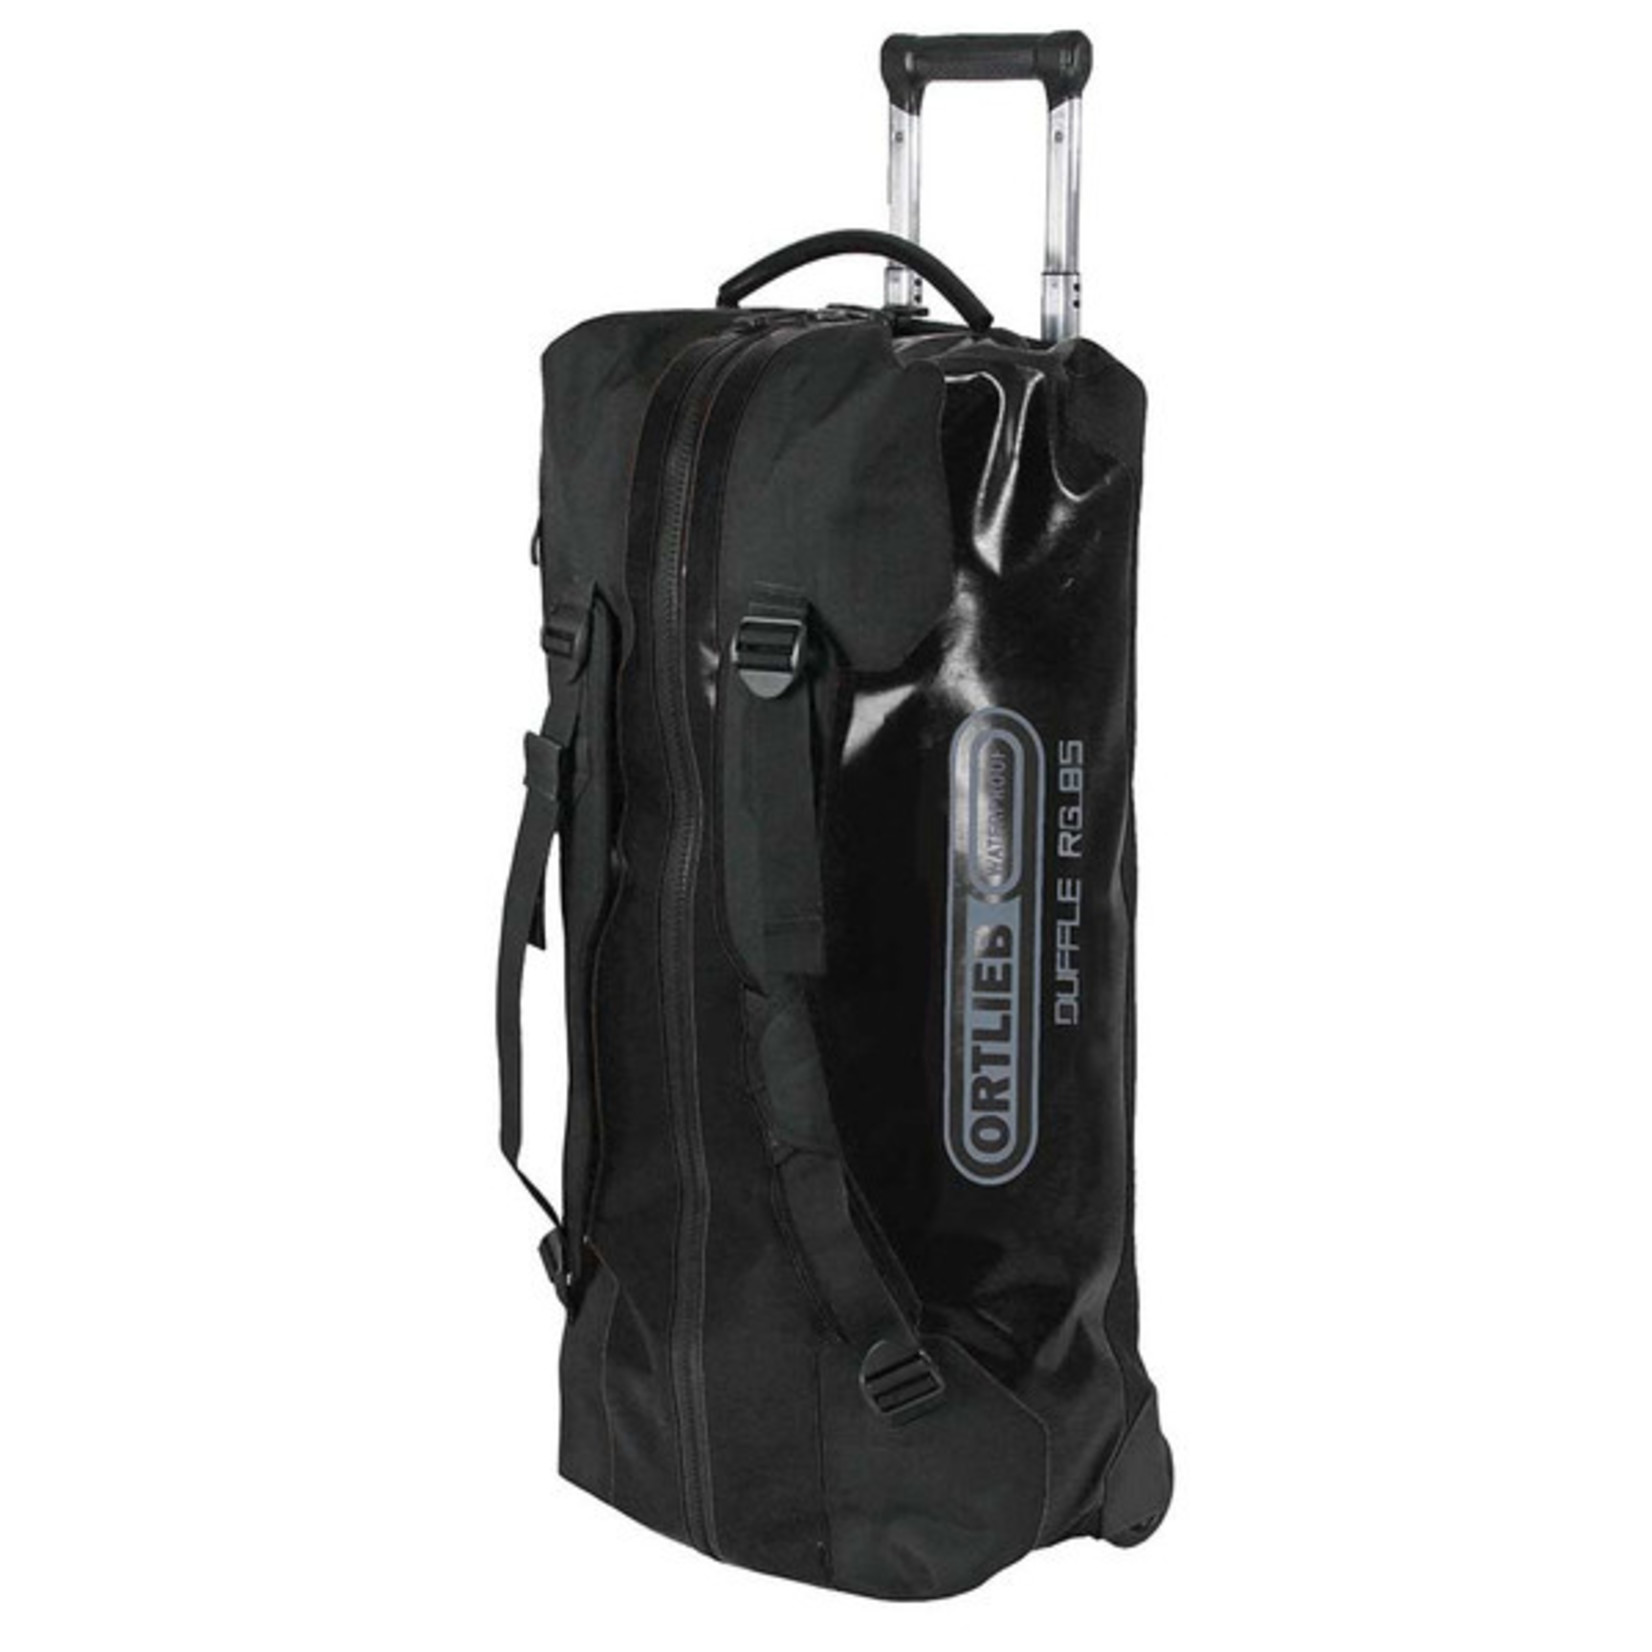 Ortlieb Ortlieb Duffle RG Bag (With Telescopic Handle) K12201 - 85L Black